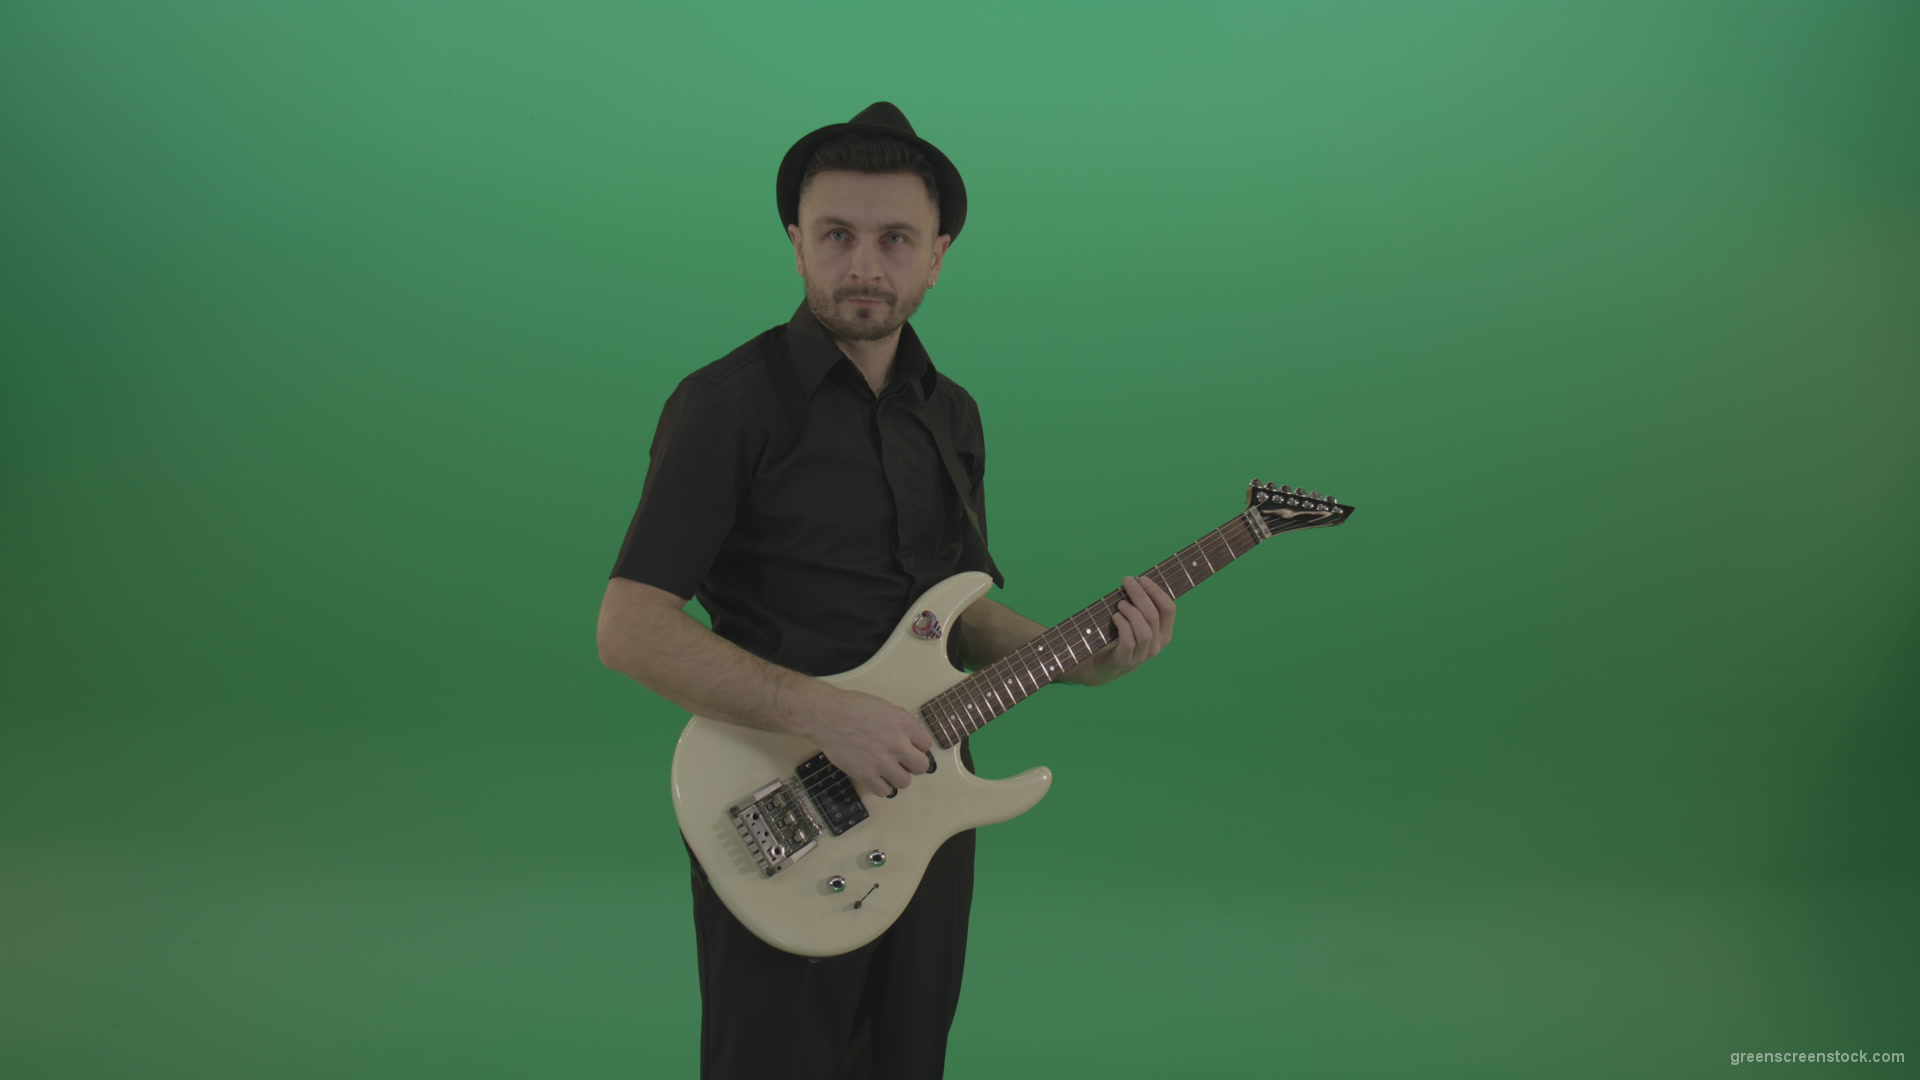 Man-in-black-playing-white-guitar-on-green-screen_001 Green Screen Stock